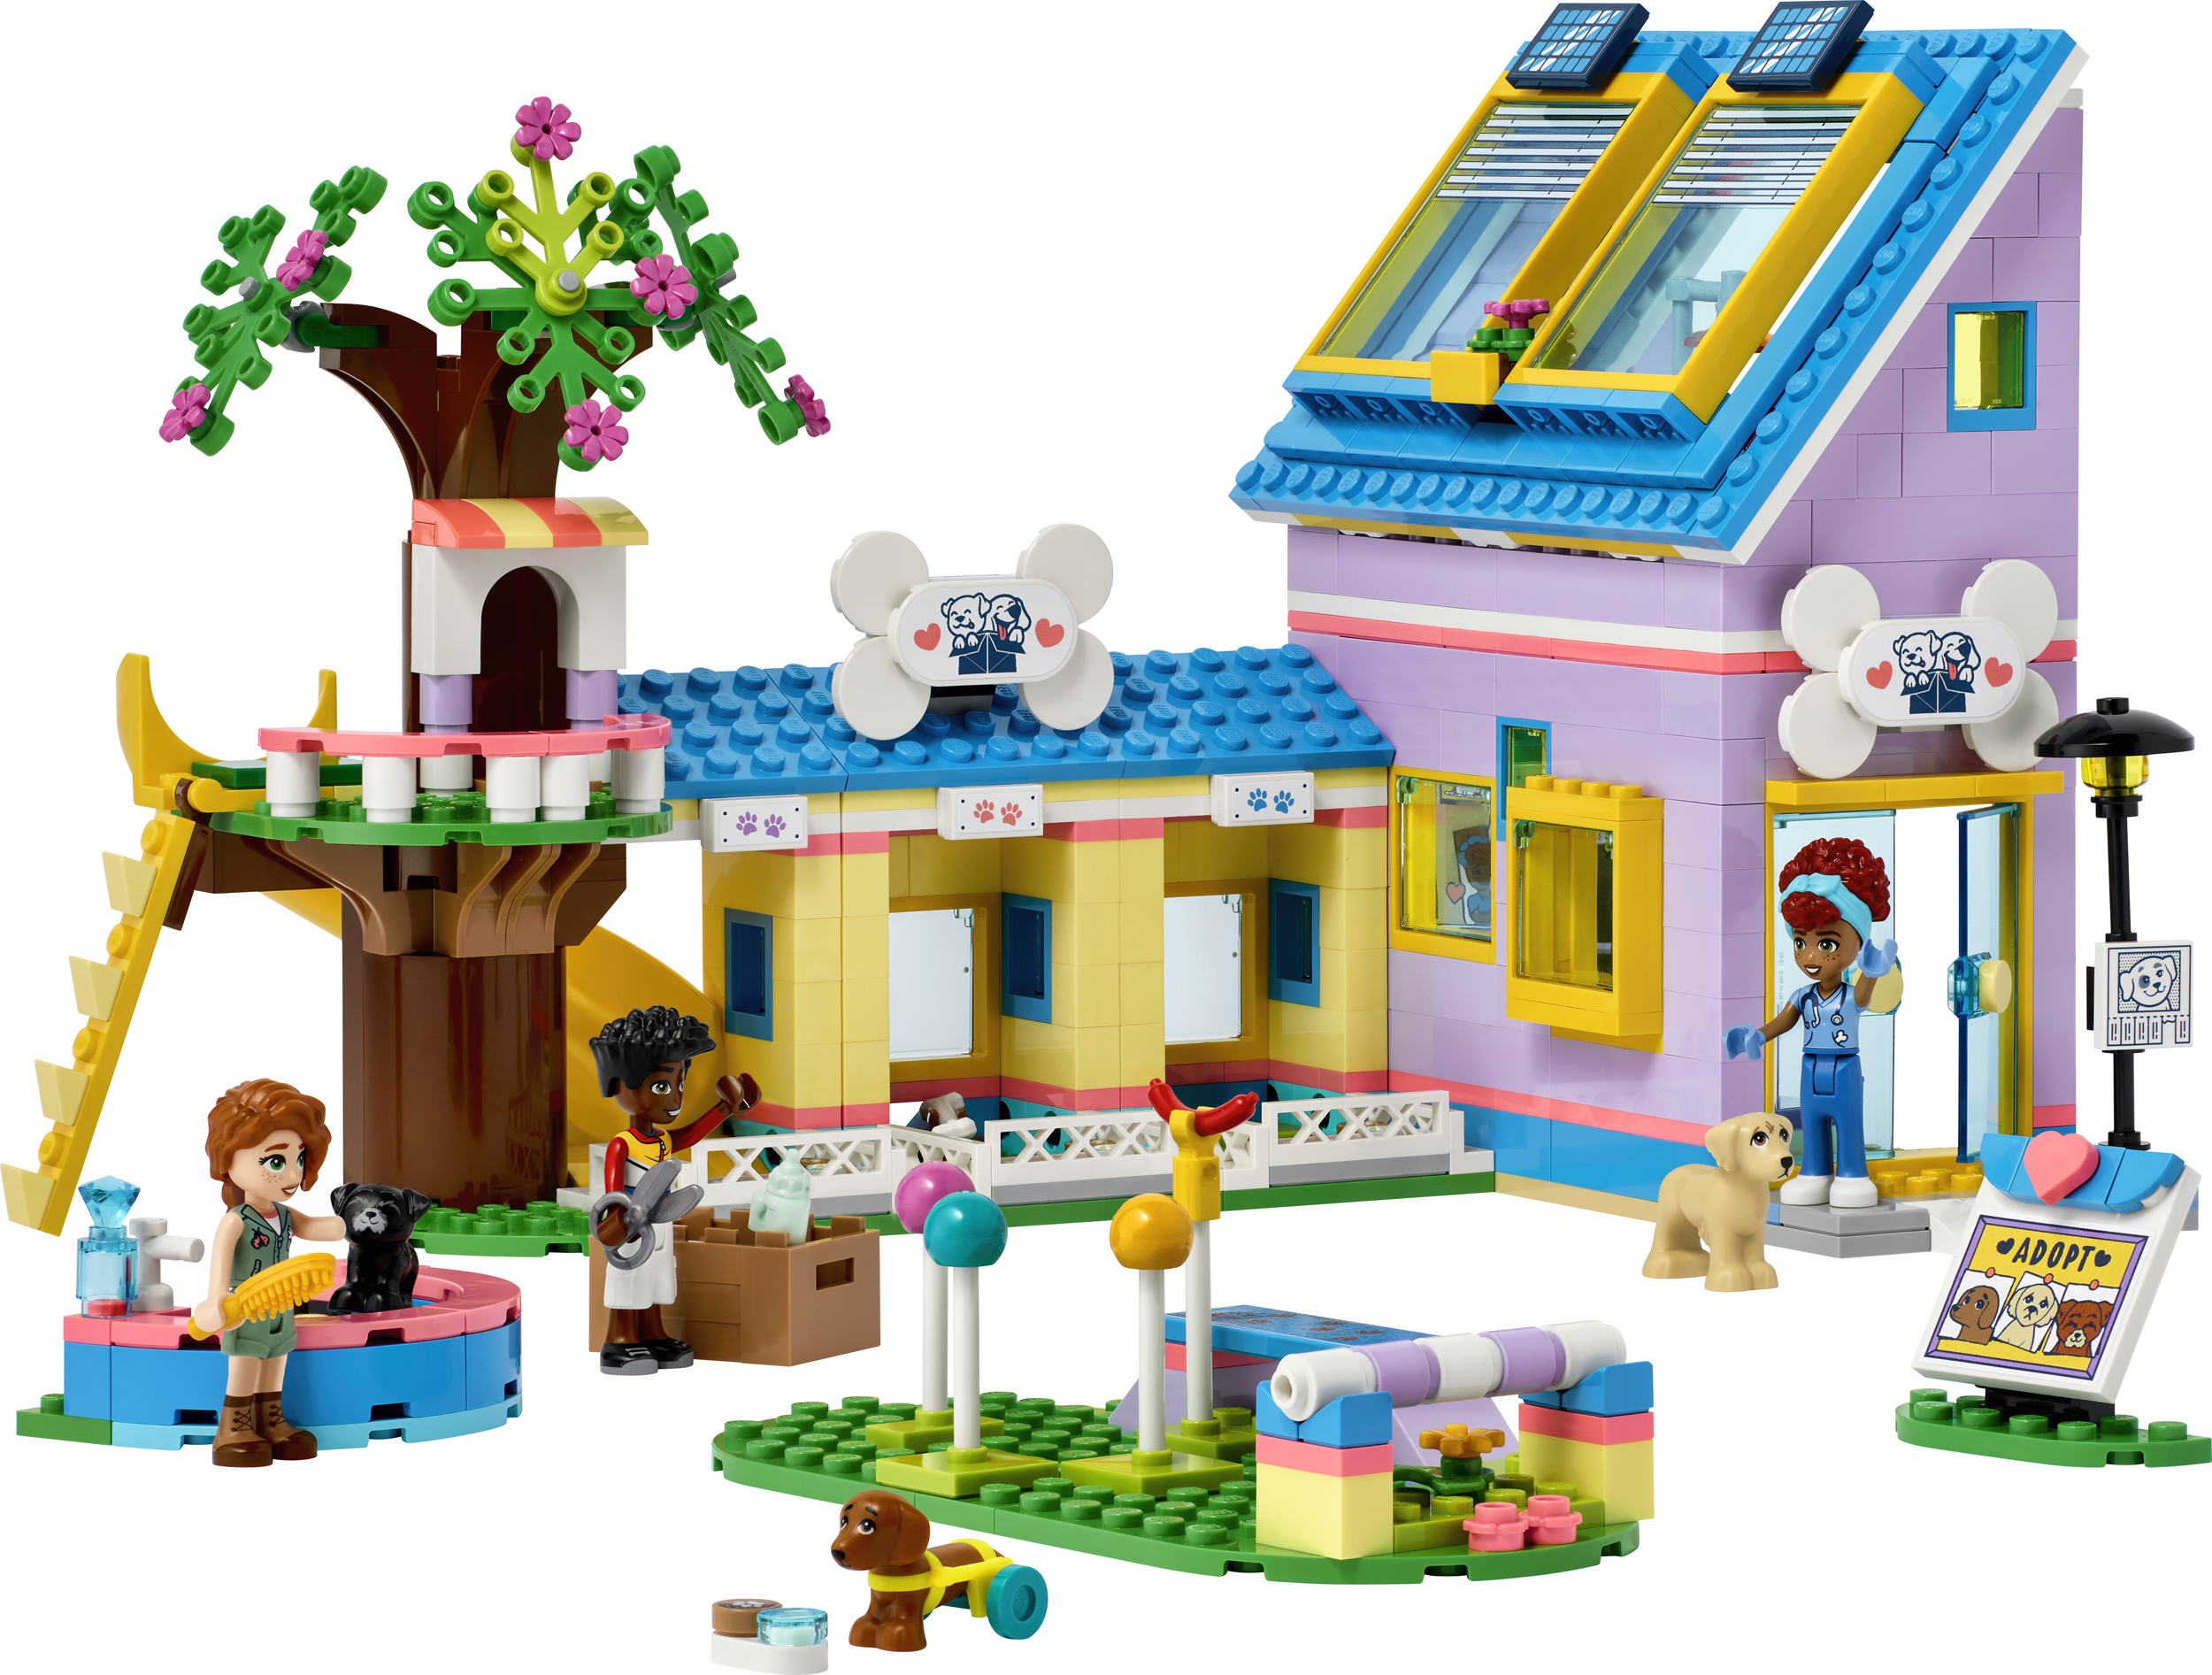 LEGO Friends 2023 Official Set Images - The Brick Fan